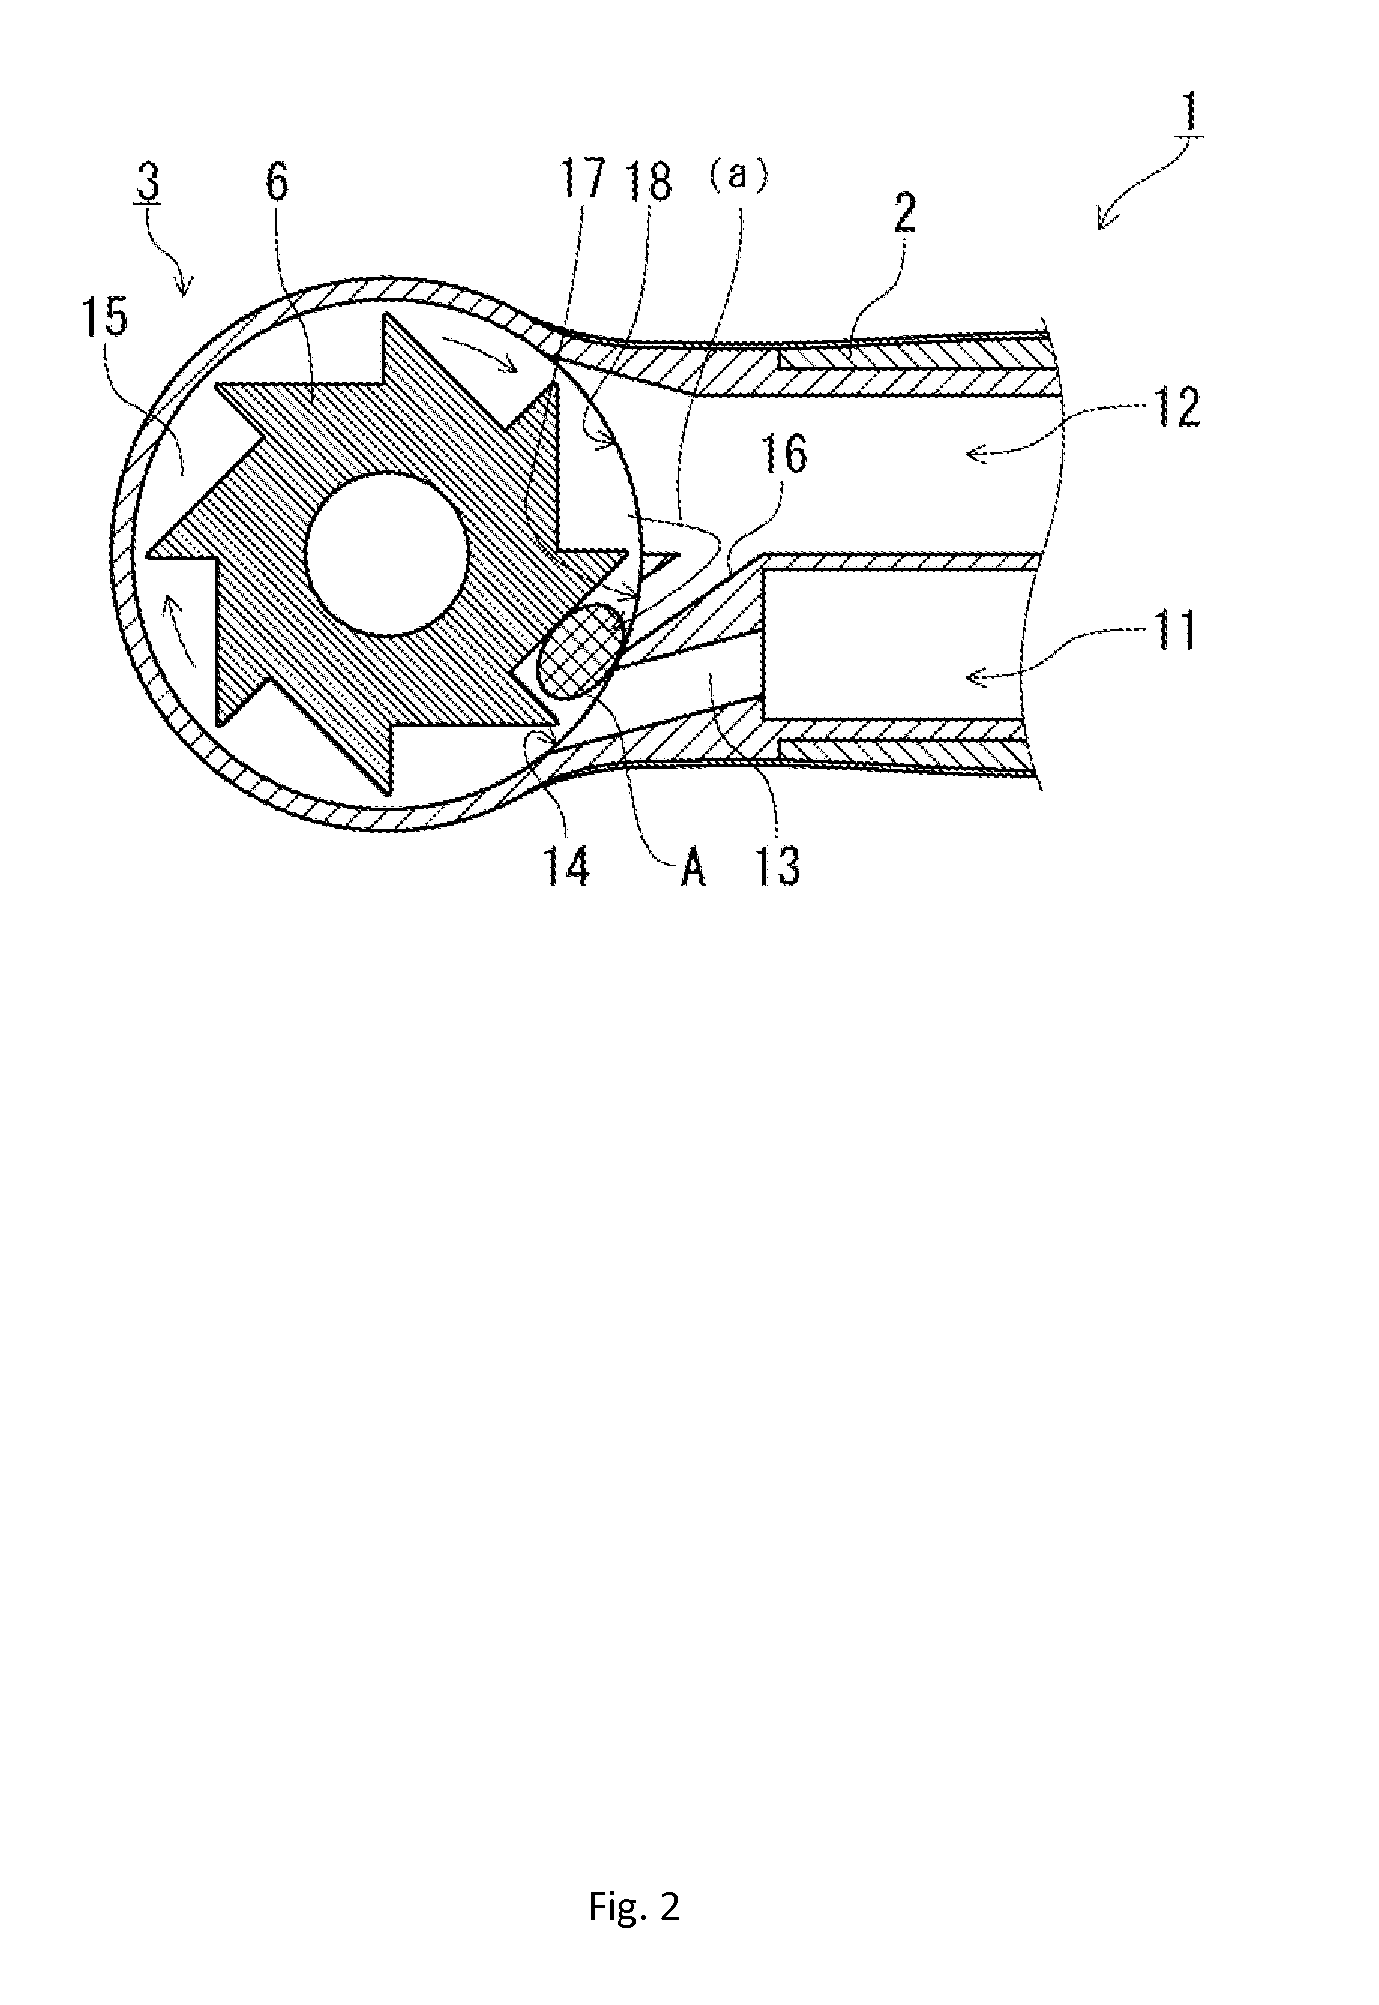 Air turbine handpiece